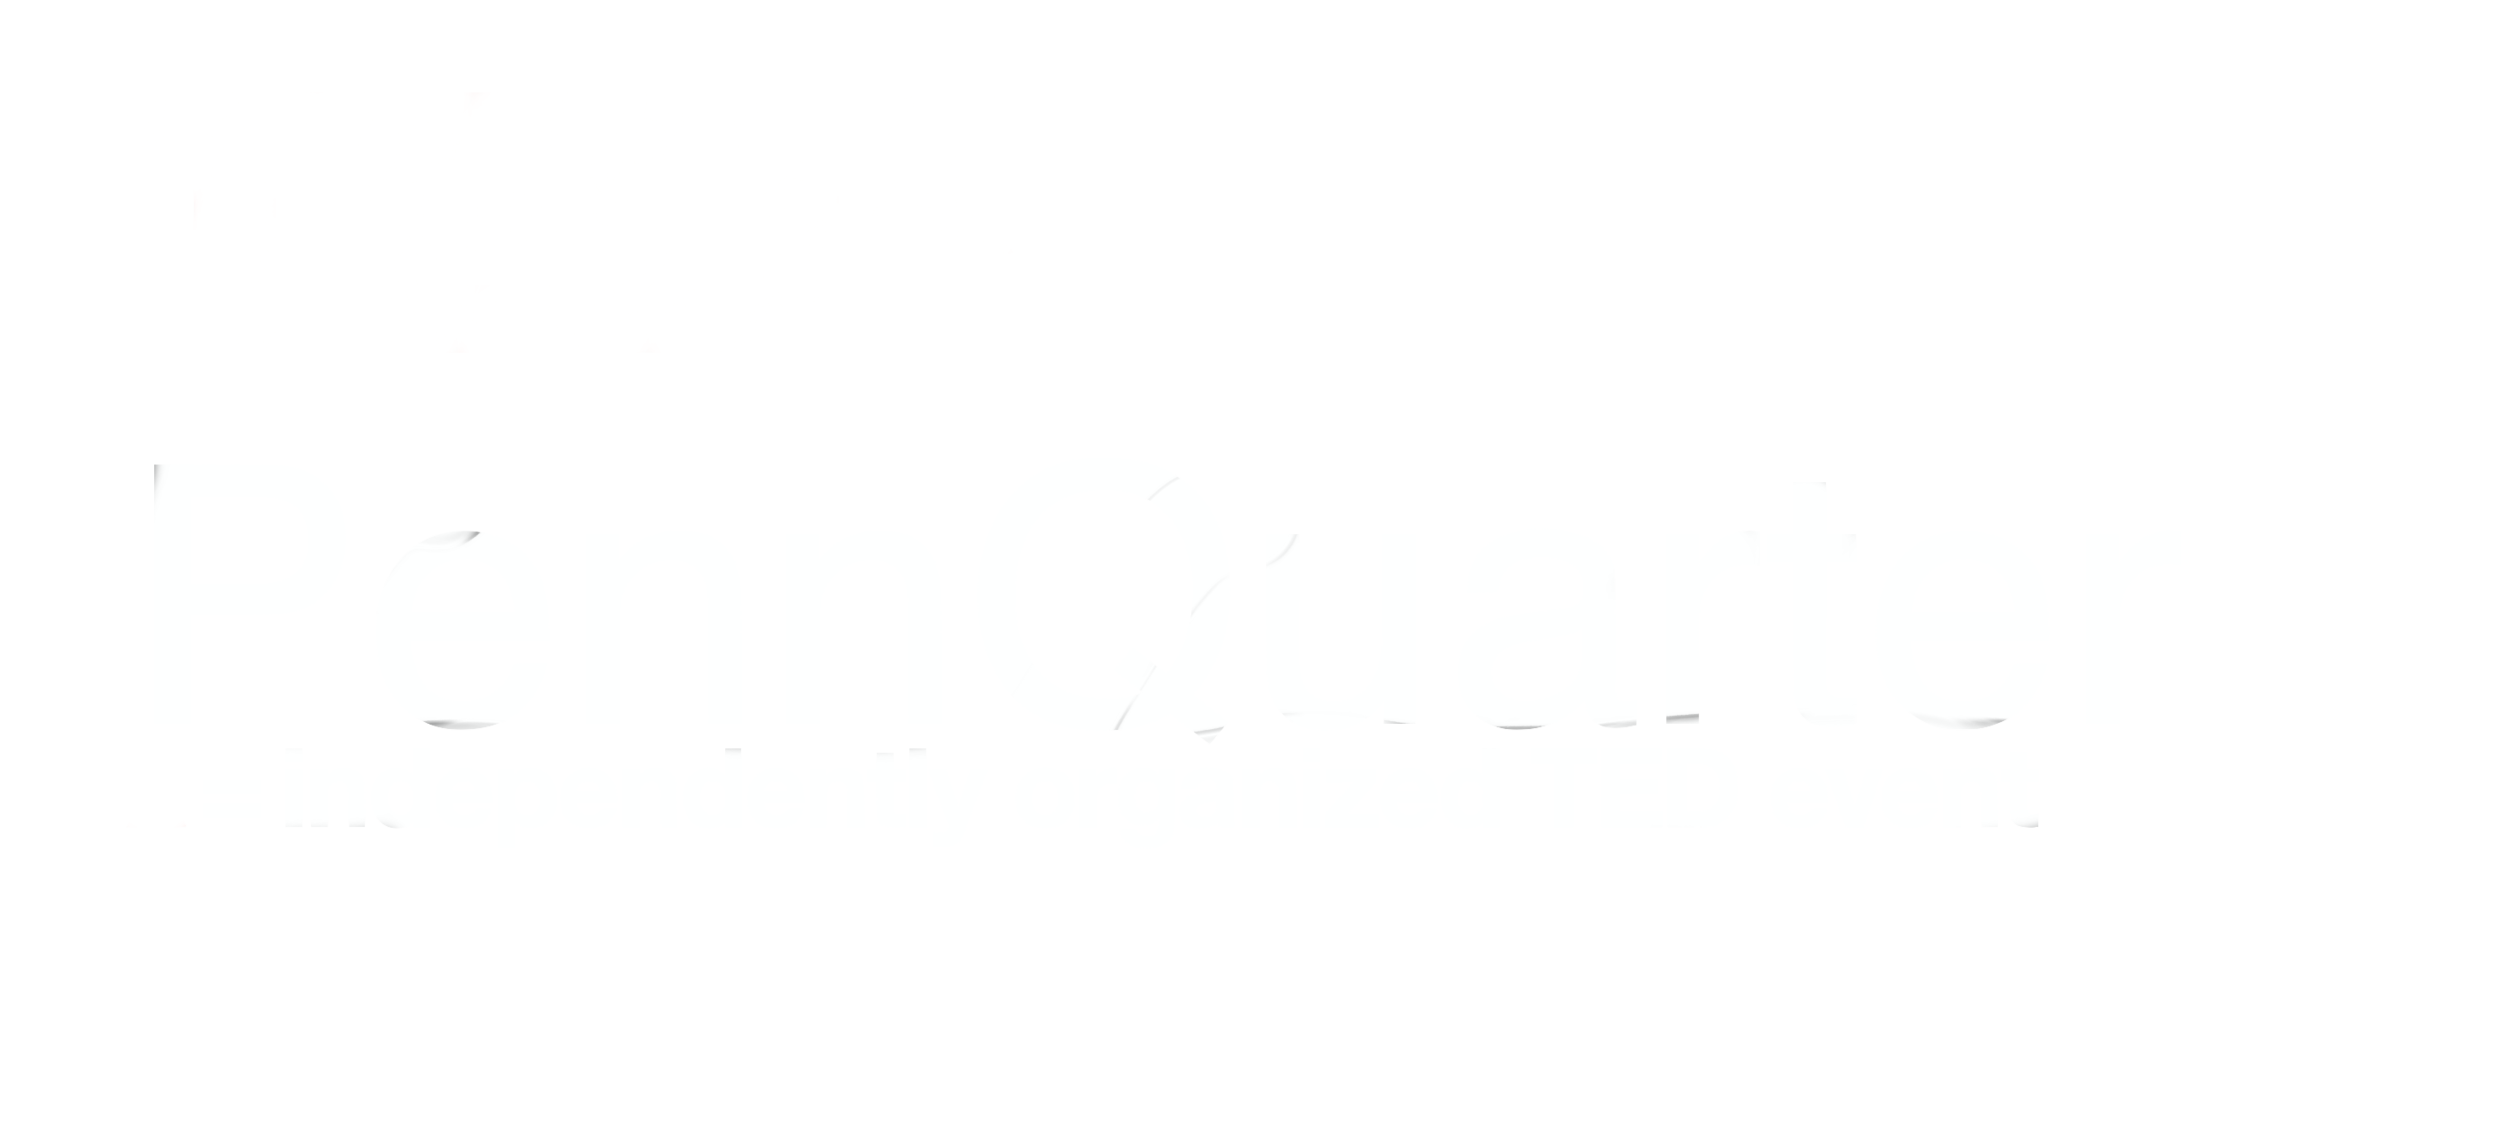 TEDx_logo_penn quarter_RGB_CS2 copy.png